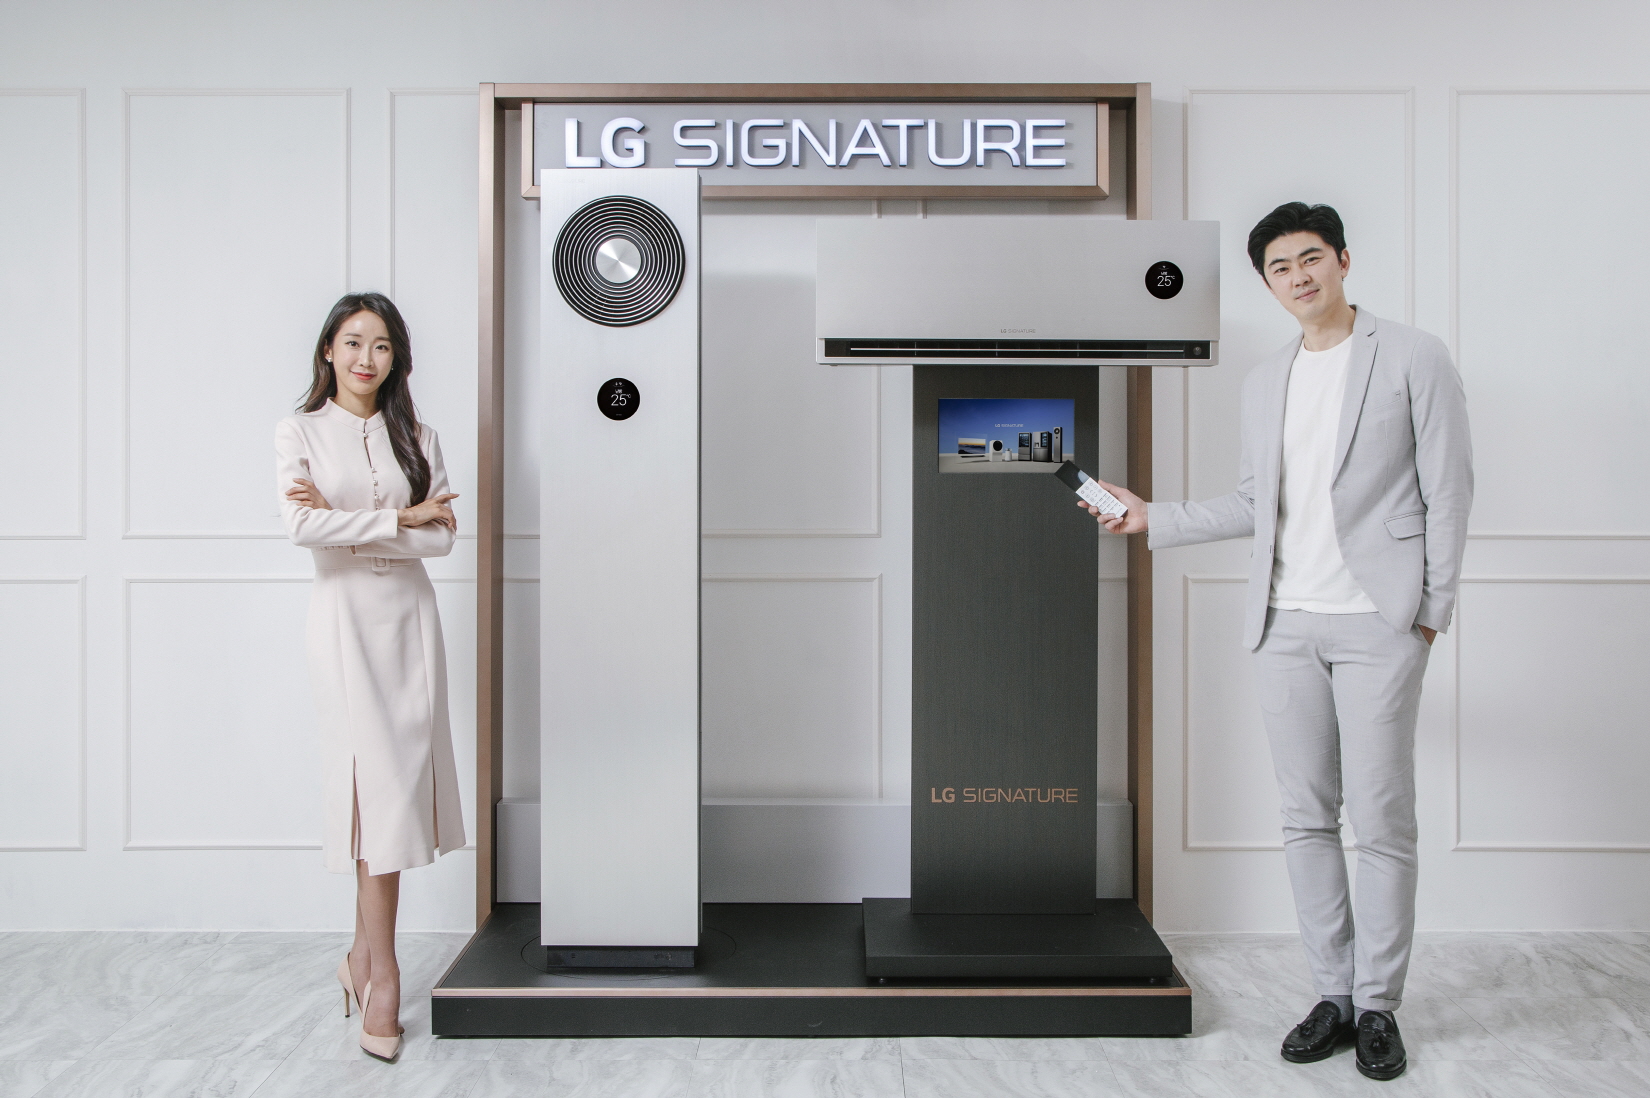 LG전자 모델이 냉방 성능을 강화한 超프리미엄 에어컨인 'LG 시그니처(LG SIGNATURE) 에어컨' 신제품을 소개하고 있다. 